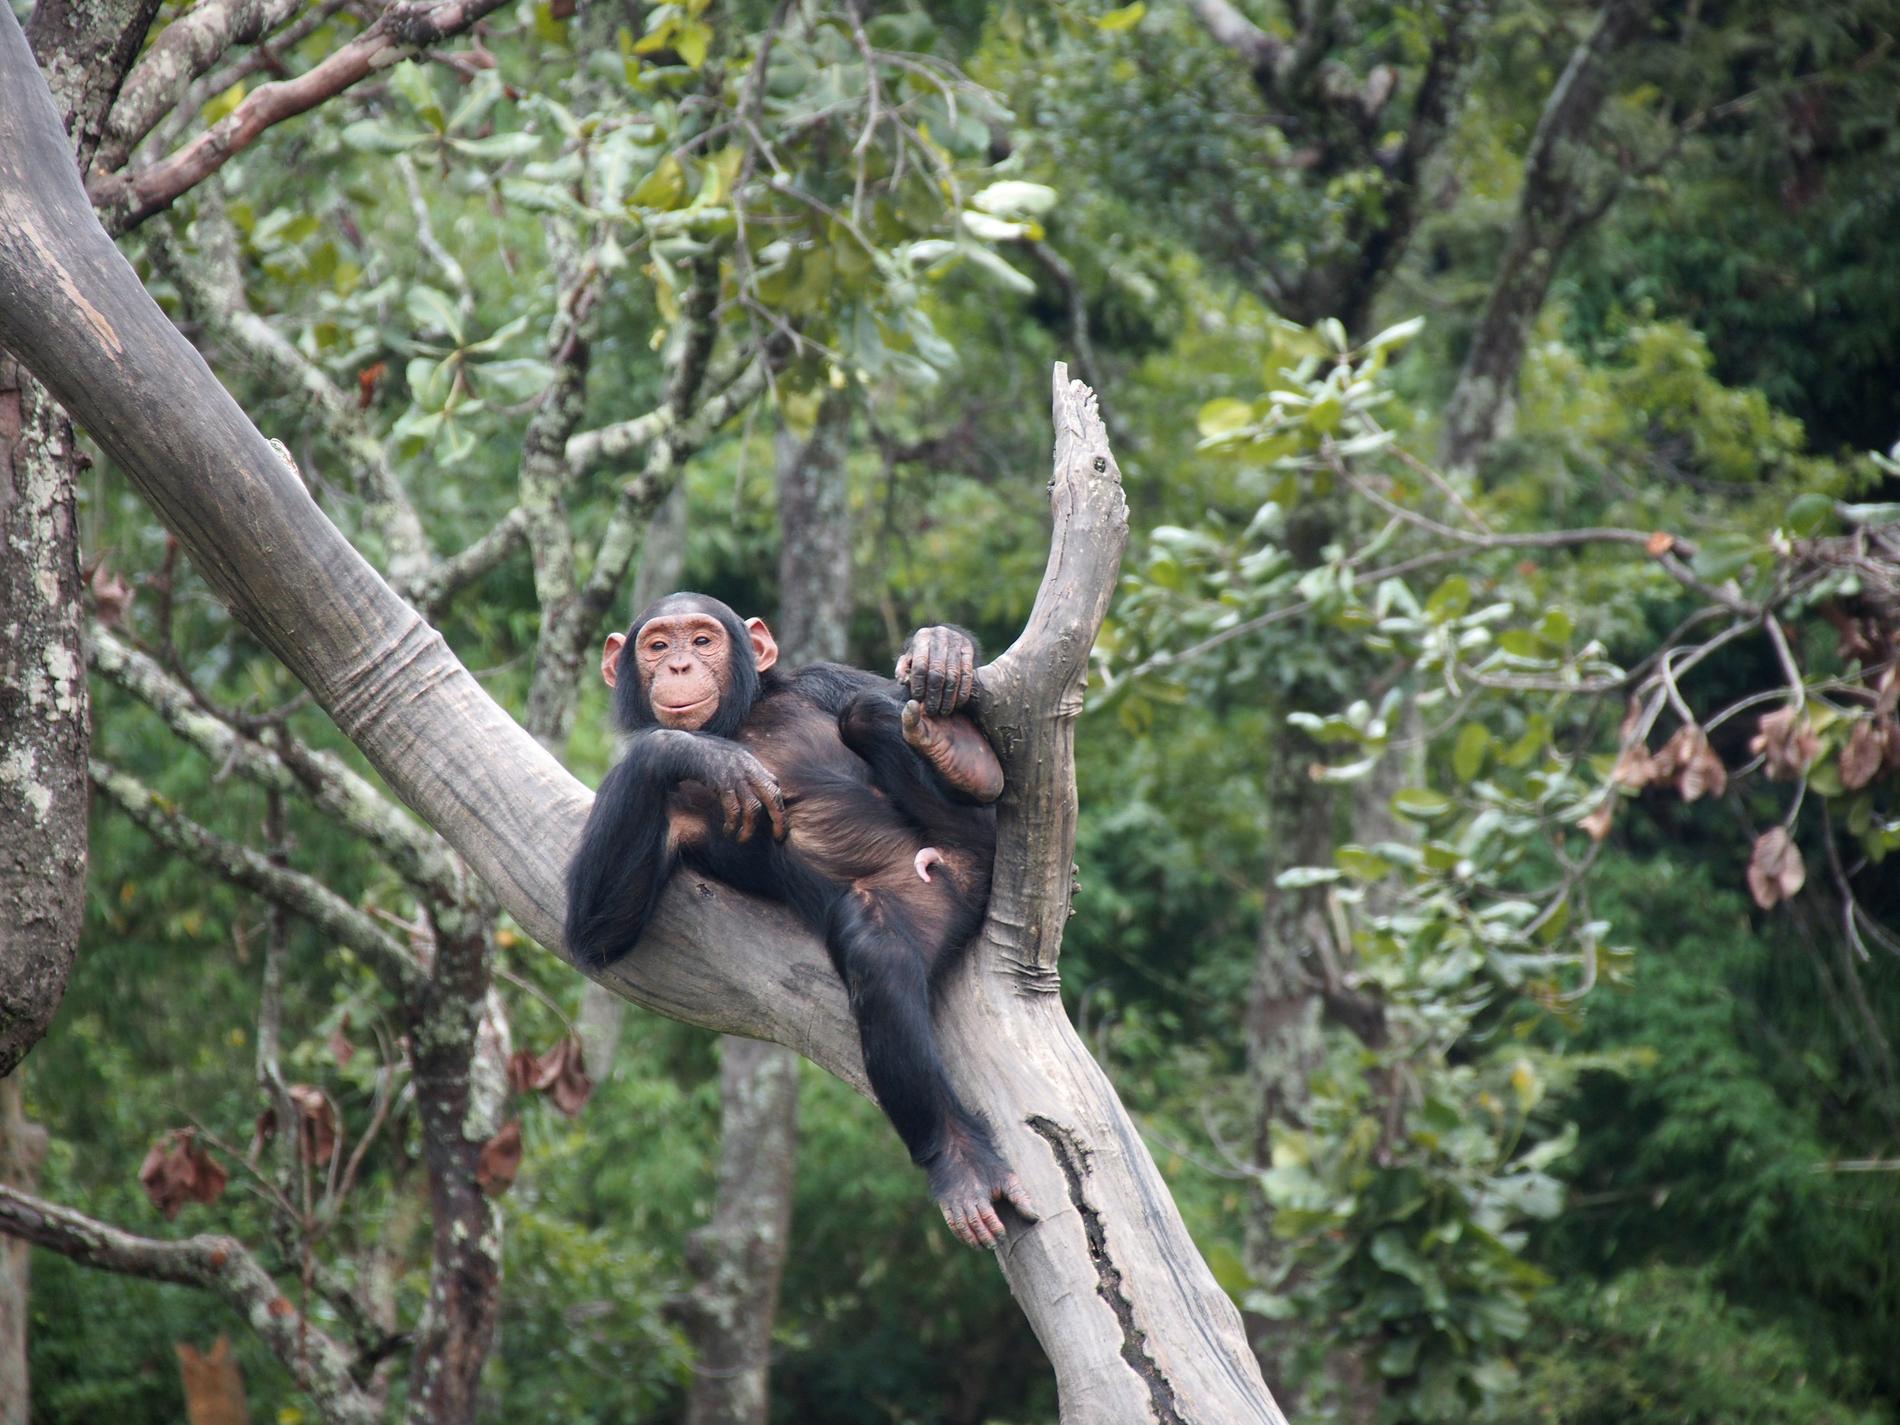 Forskarna studerade schimpanser (Pan troglodytes) i ett naturreservat i Zambia